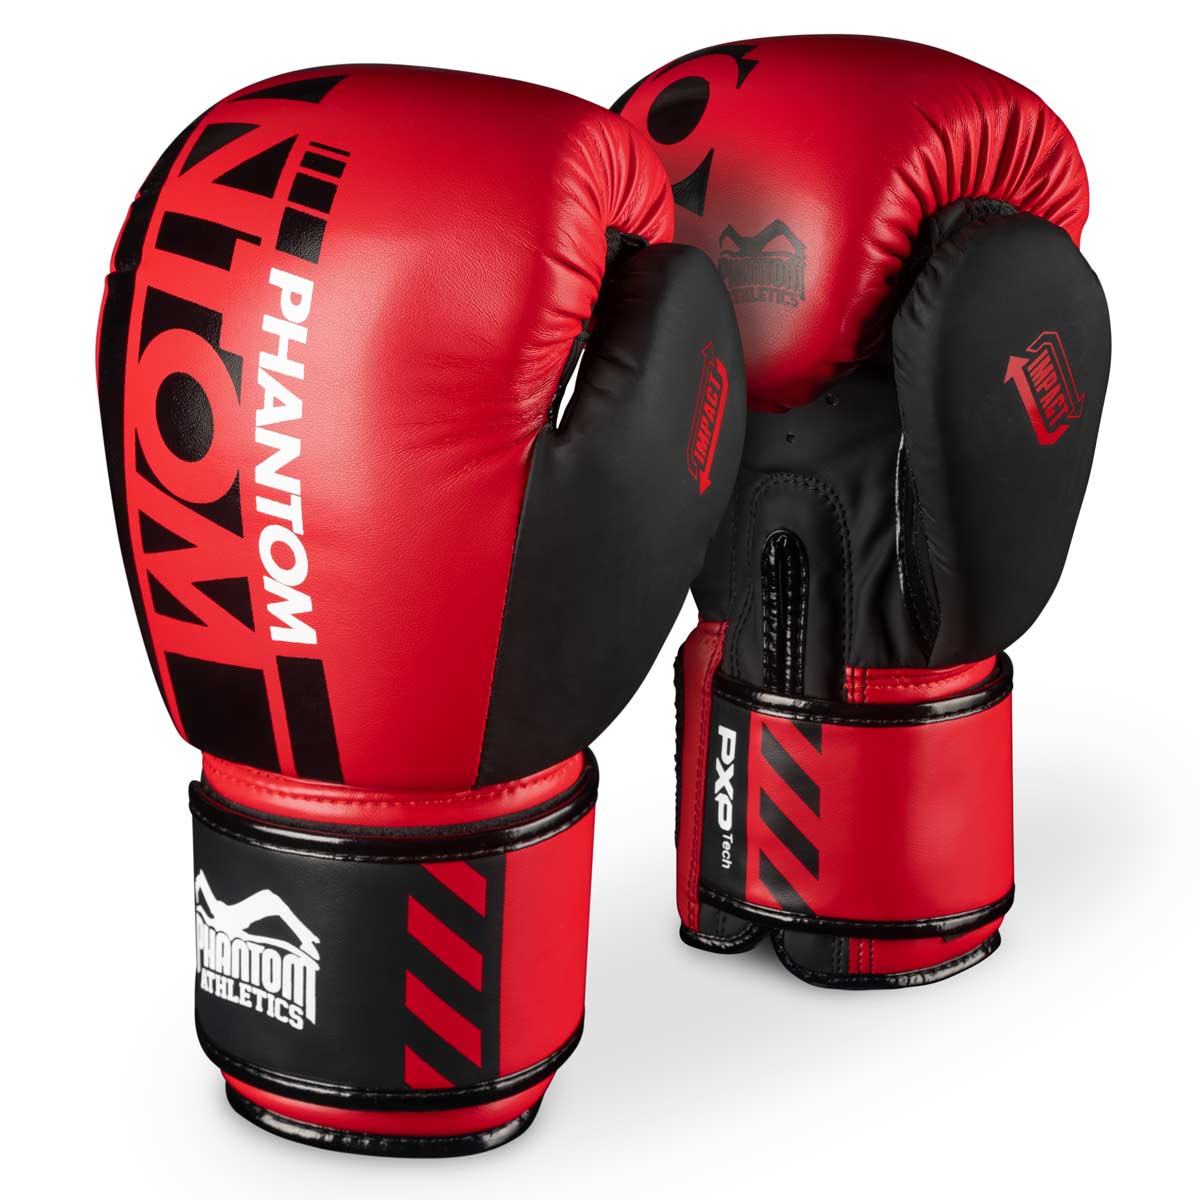 Phantom γάντια πυγμαχίας APEX στην περιορισμένη ΚΟΚΚΙΝΗ έκδοση. Τέλεια γάντια για την προπόνησή σας στις πολεμικές τέχνες όπως MMA, Muay Thai, Thai boxing, K1 ή πυγμαχία.